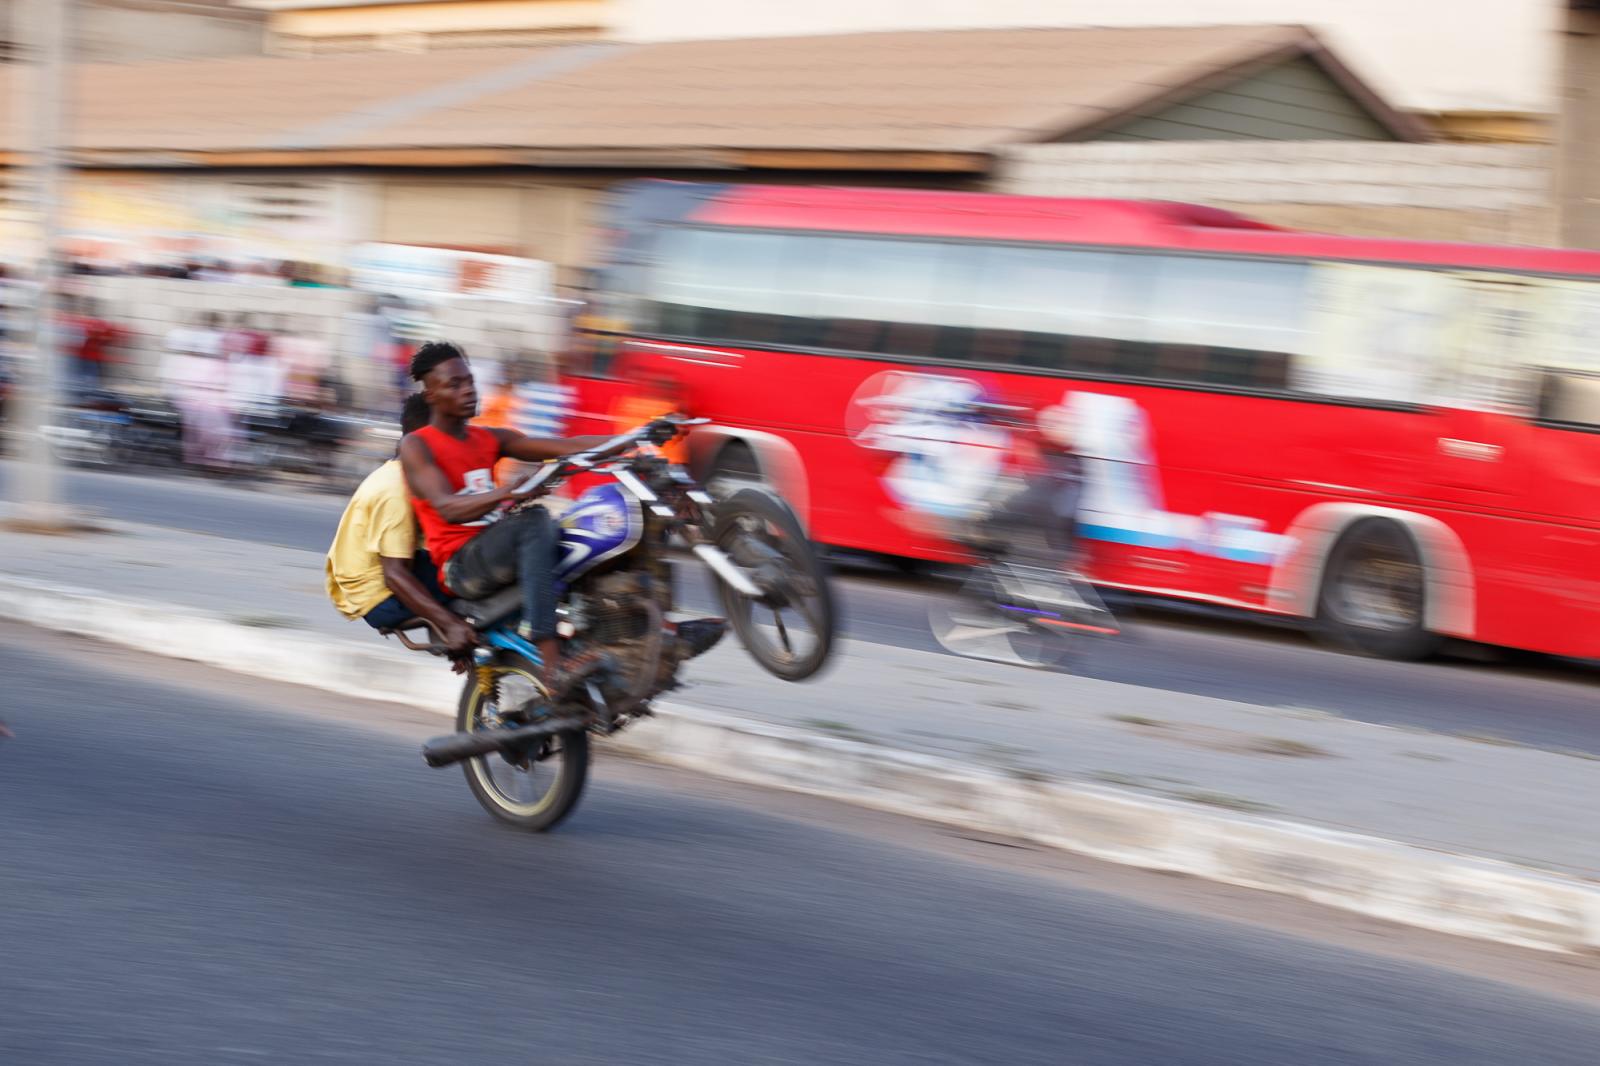 Motorcycle stunts on the streets of Jamestown in Accra, Ghana.